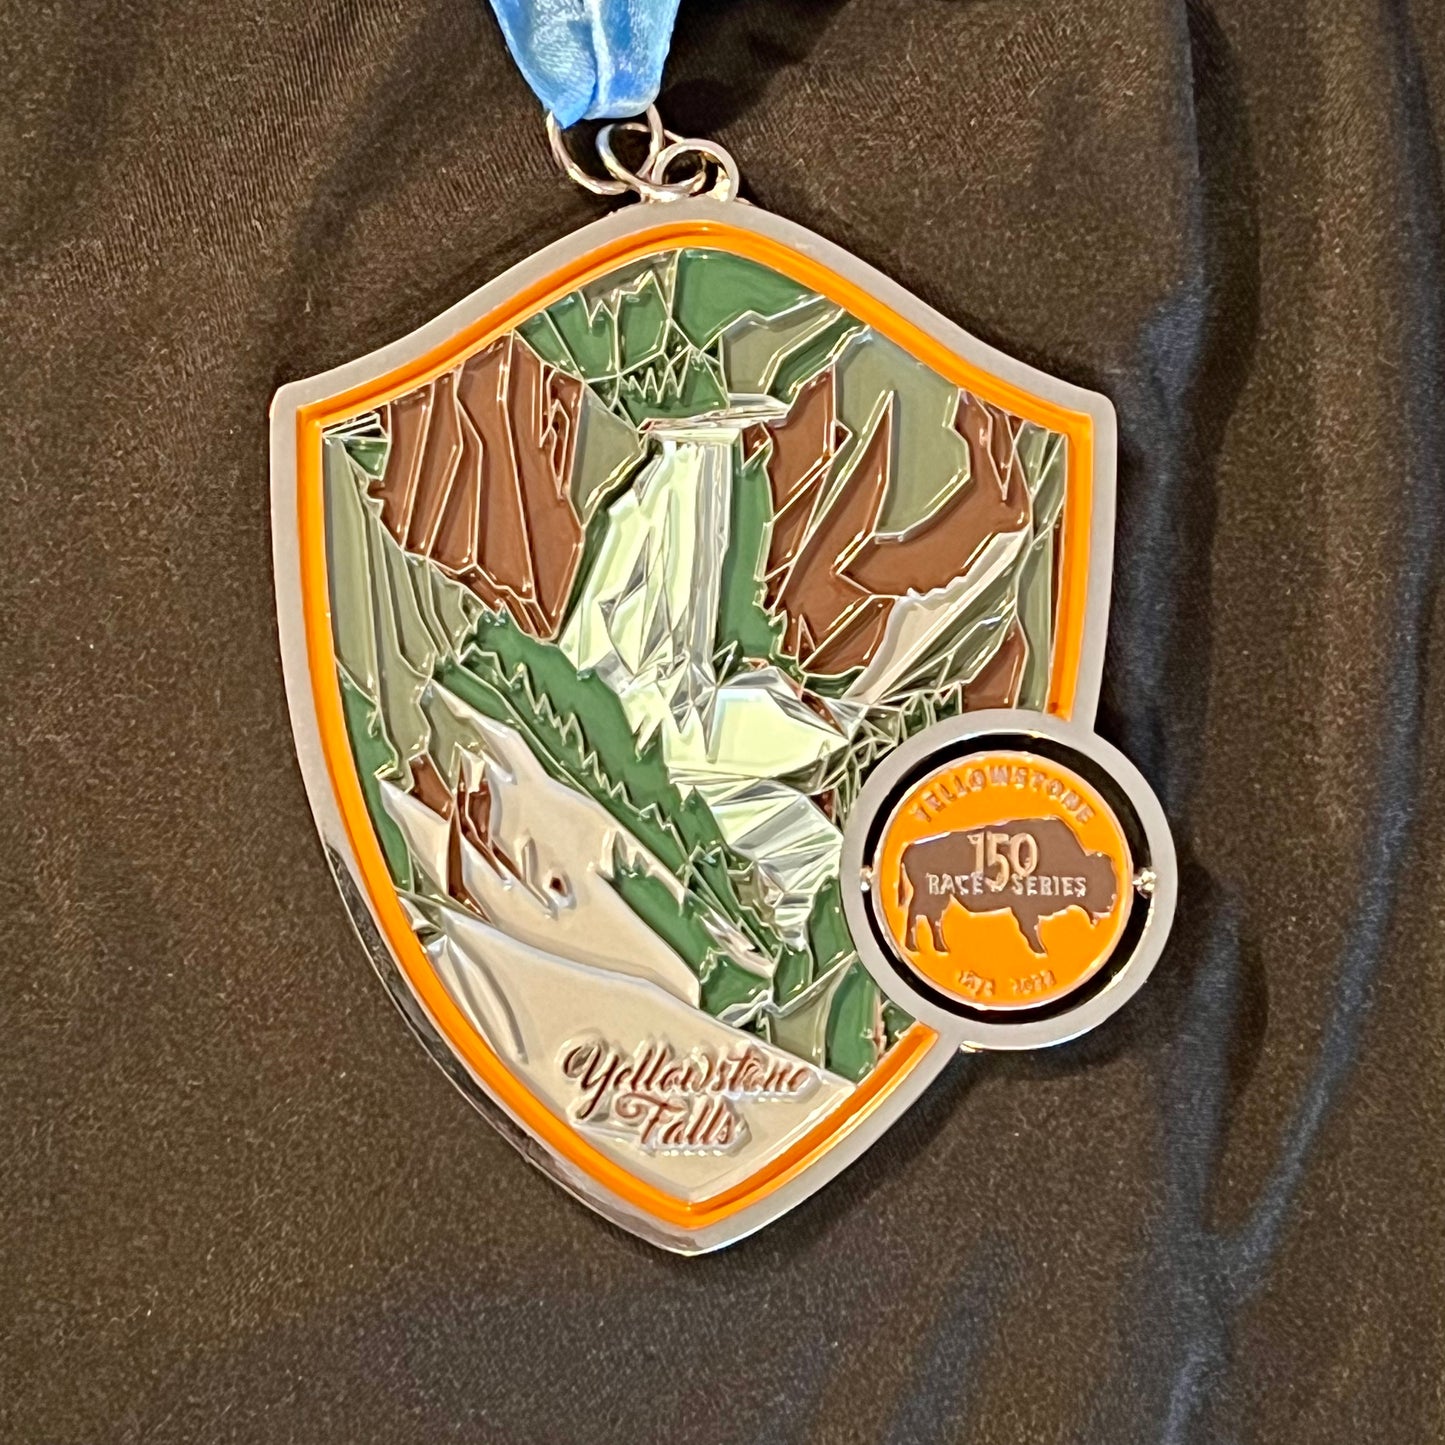 Yellowstone Falls Race - 150 Years - Medal